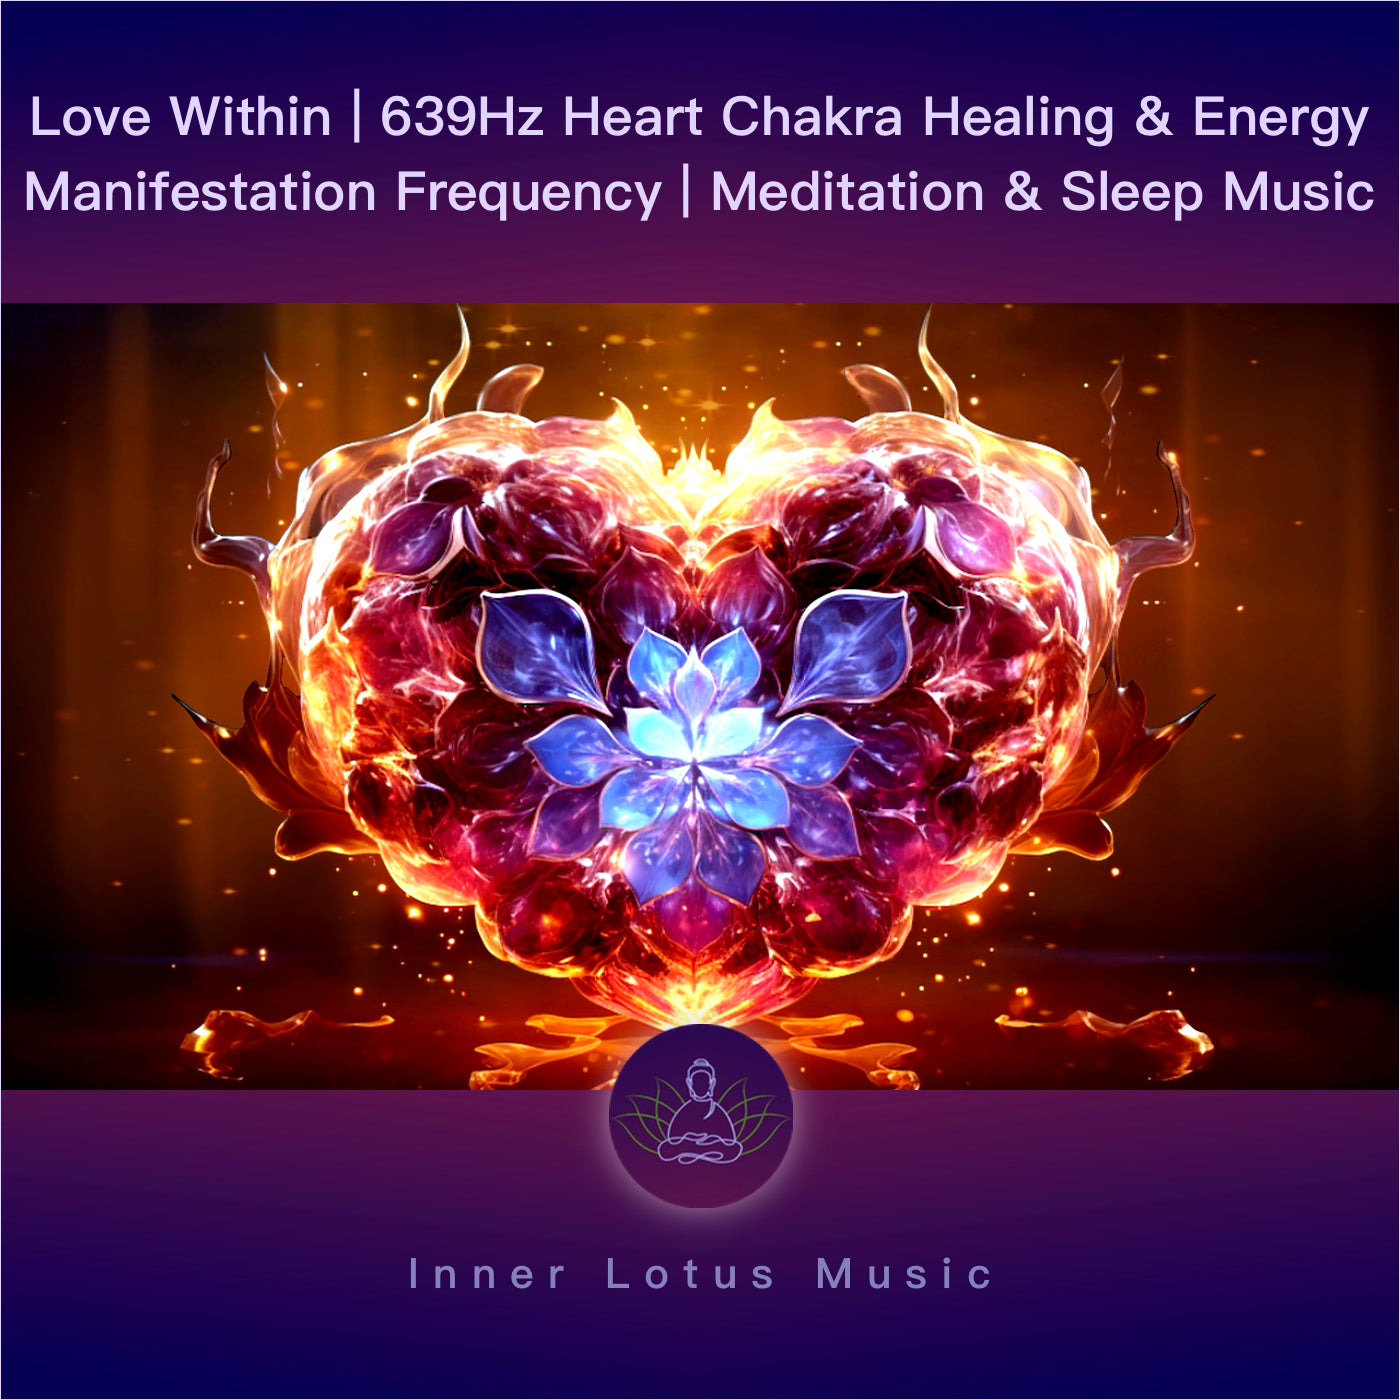 Love Within | 639Hz Heart Chakra Healing & Energy Manifestation Frequency | Meditation & Sleep Music